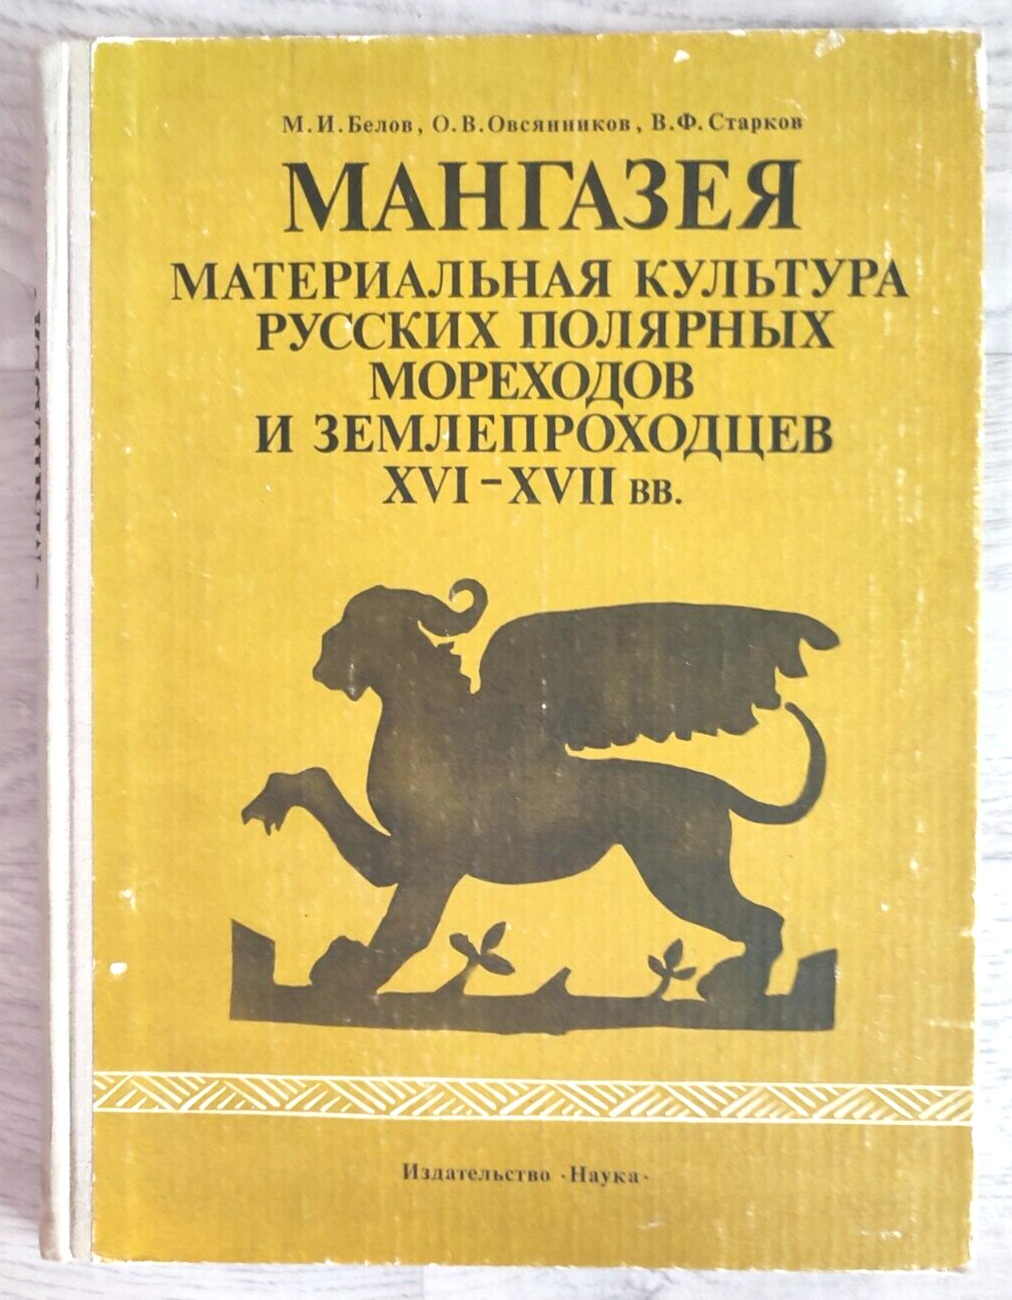 1981 Mangazeya Material culture Archeology Siberia Ceramics 2700 Russian book